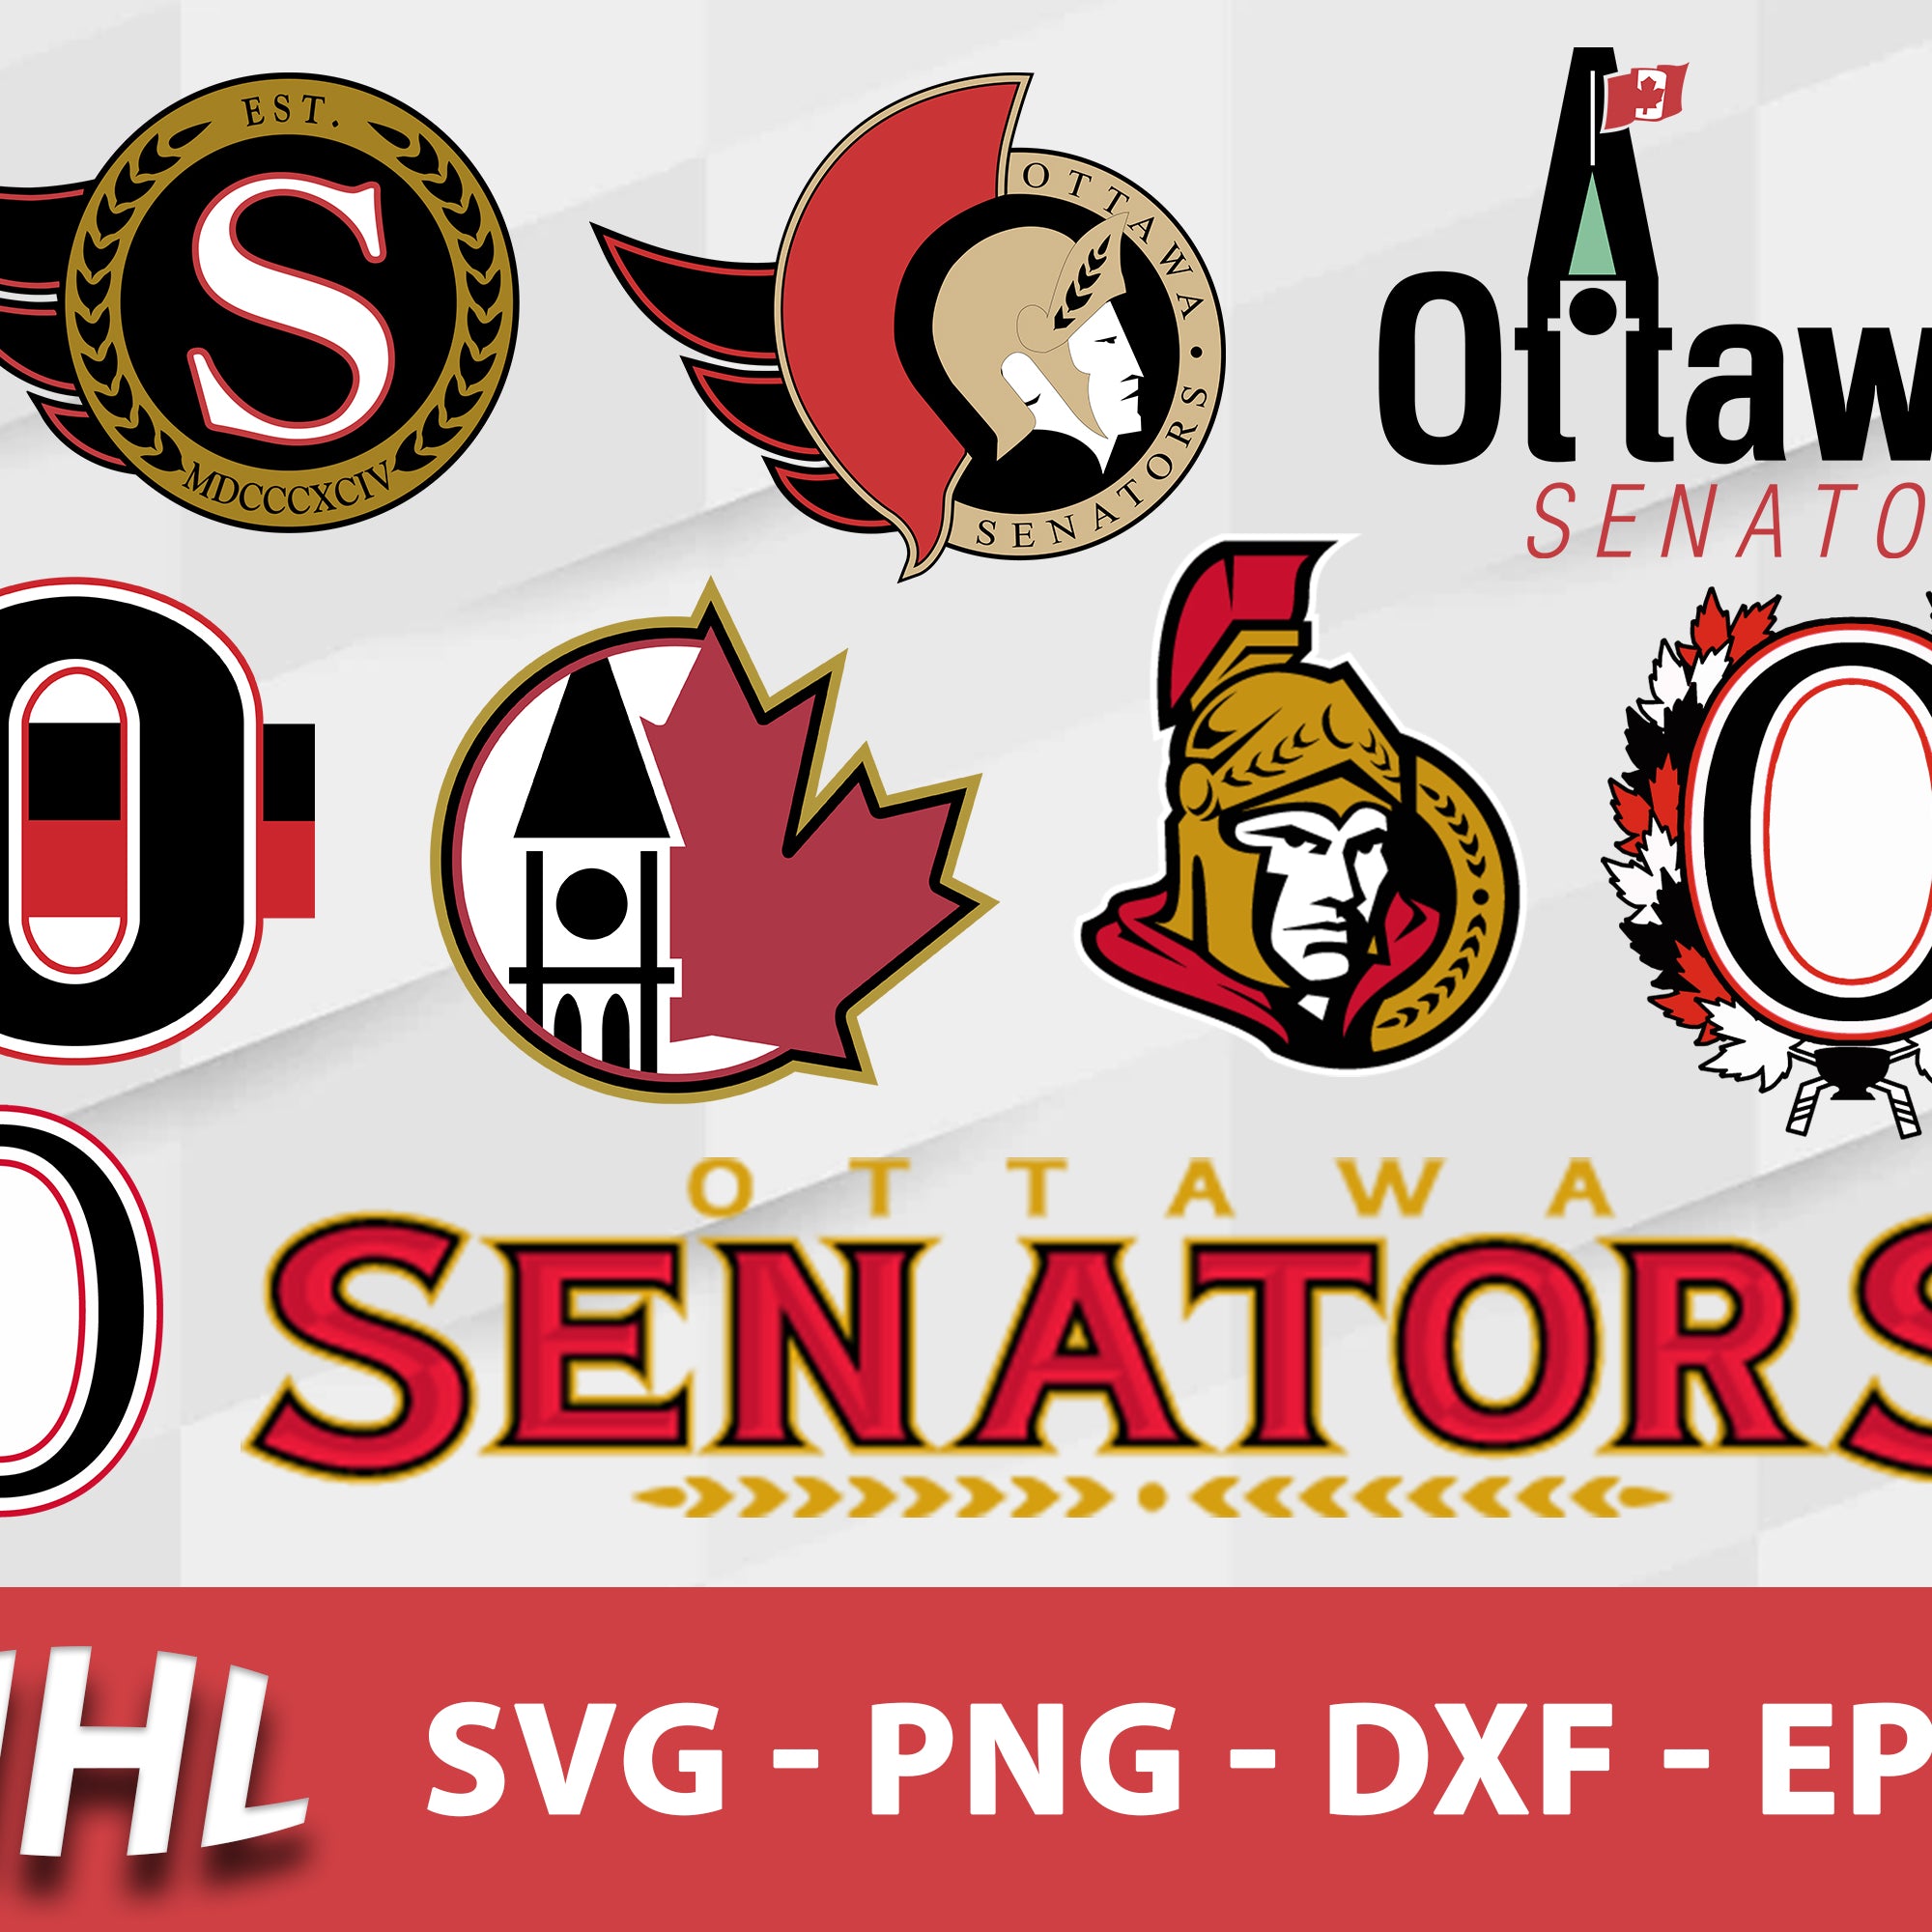 Ottawa Senators Svg Bundle, Ottawa Senators Svg, Sport Svg, Nhl Svg, Png, Dxf, Eps Digital File.